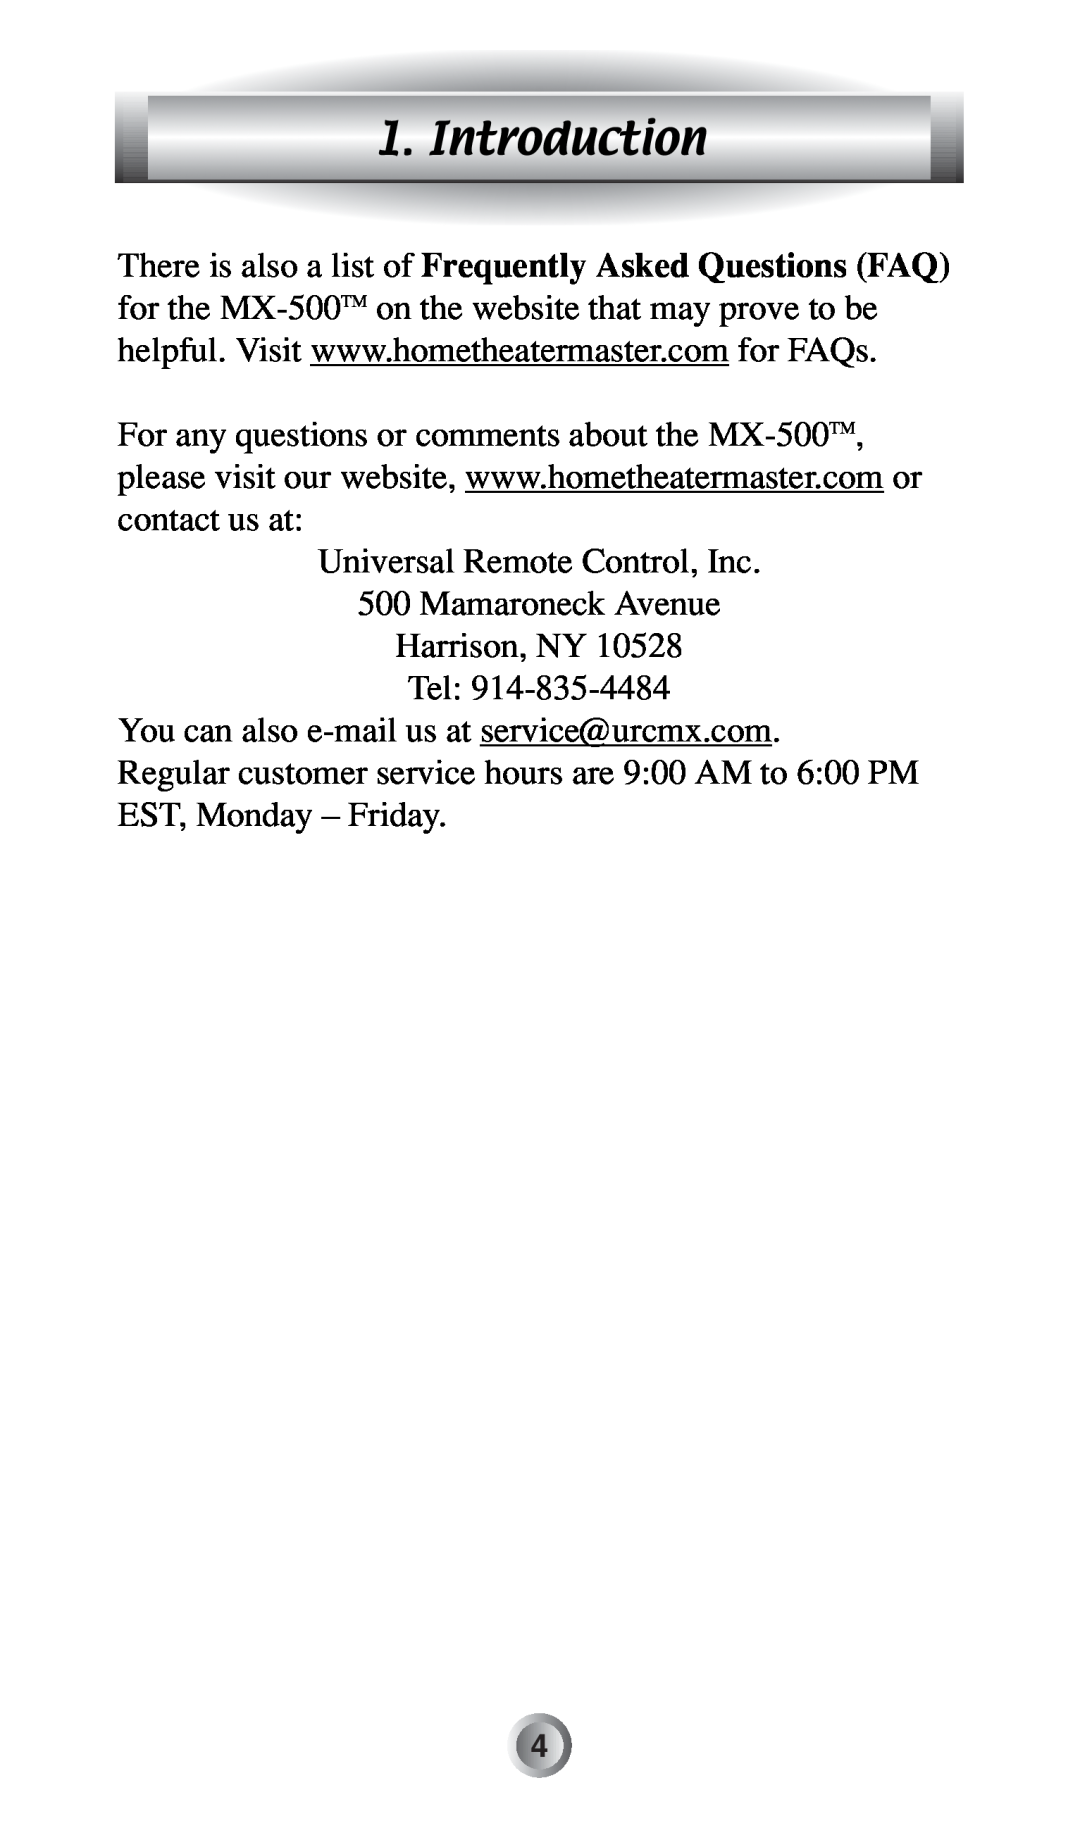 Radio Shack MX-500TM manual Introduction, Universal Remote Control, Inc 500 Mamaroneck Avenue Harrison, NY Tel 